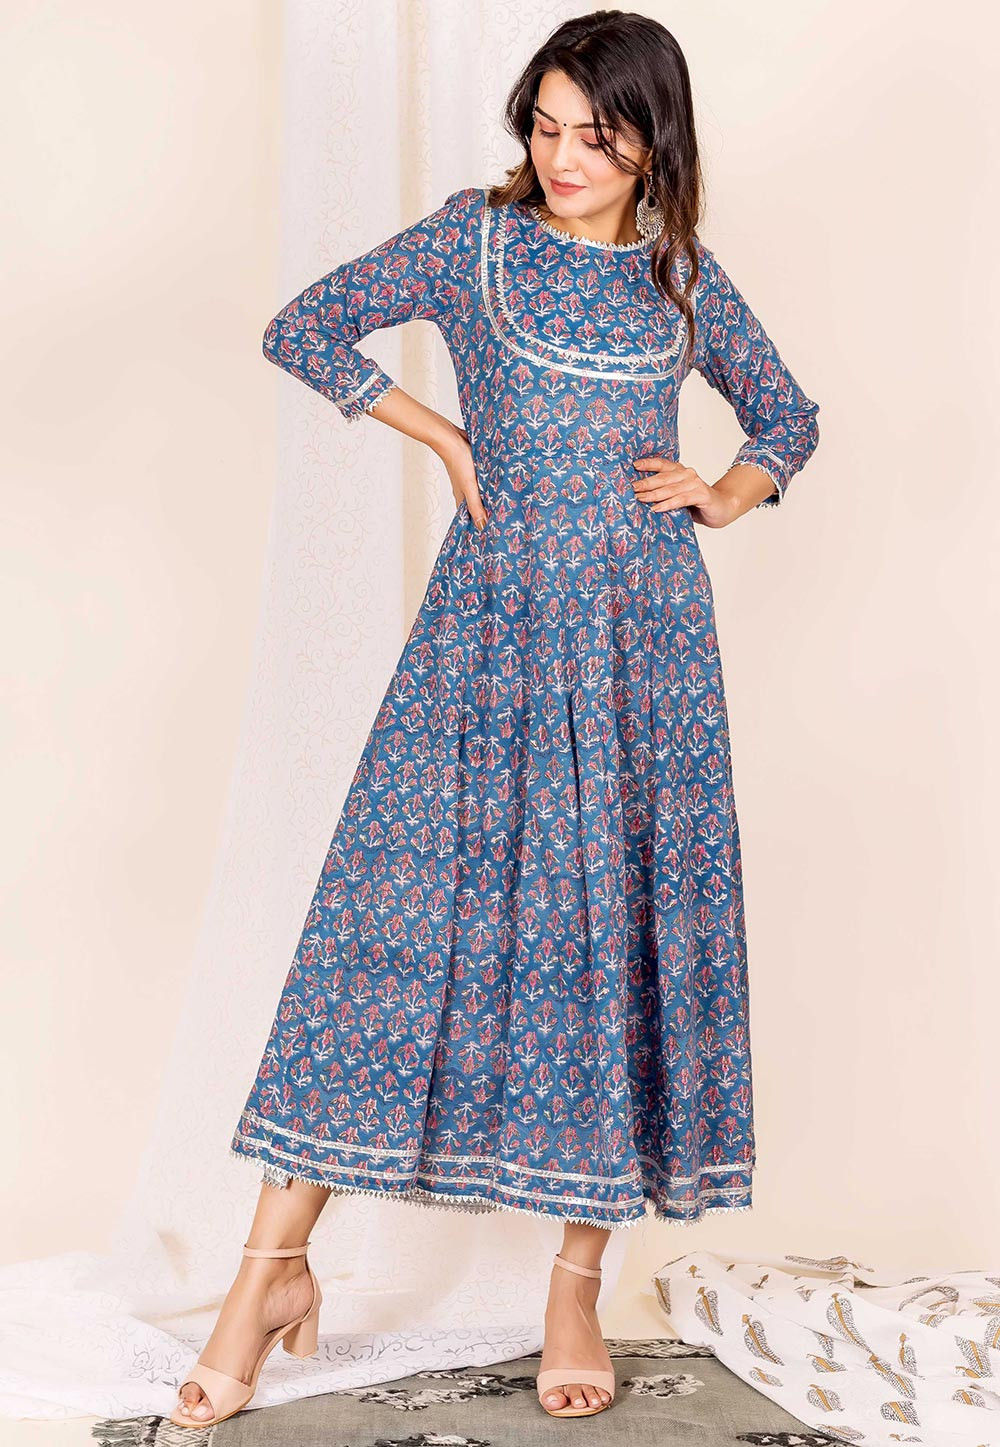 Buy Printed Cotton Anarkali Kurta in Blue Online : TQM538 - Utsav Fashion